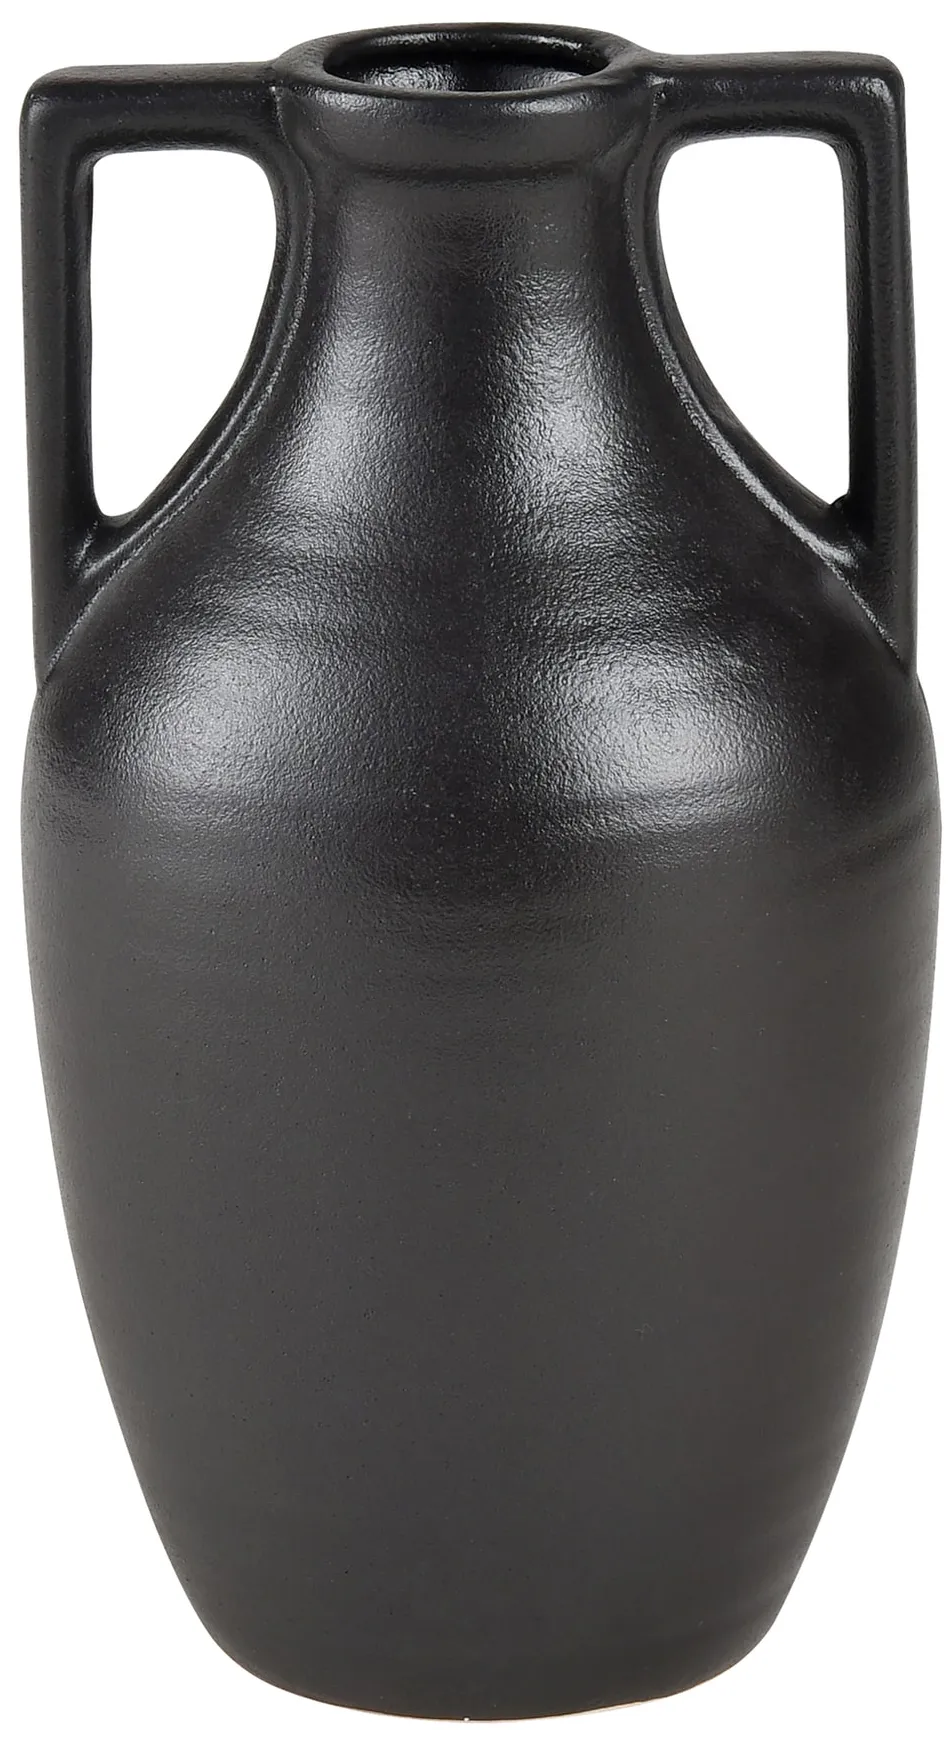 Small Black Ceramic Handled Vase 6"W x 11"H